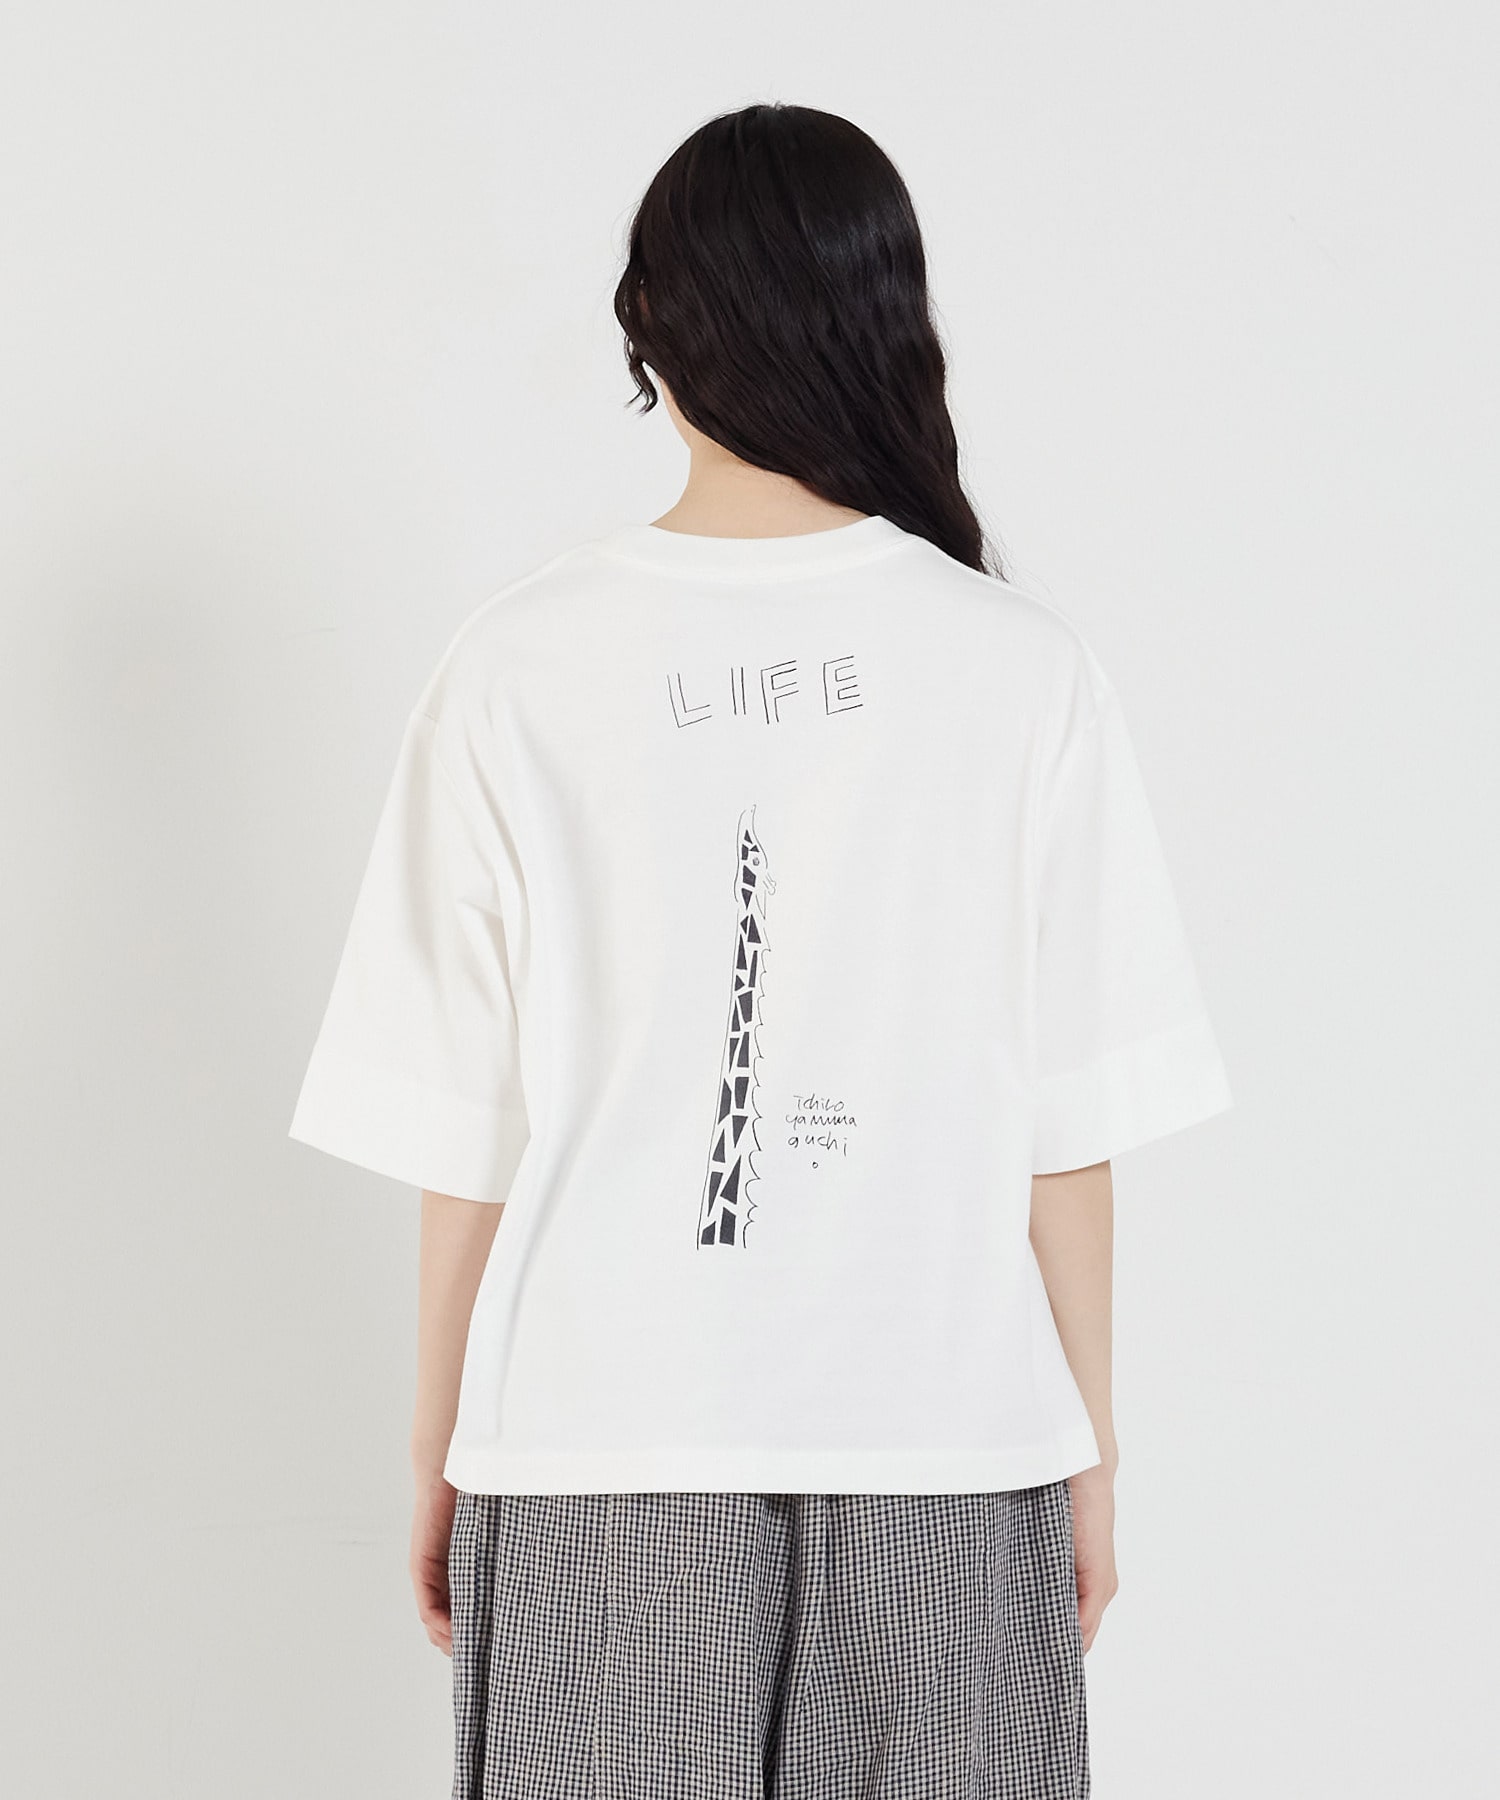 【congés payés】ichiro yamaguchi.半袖Tシャツ 詳細画像 グレイッシュベージュ 9